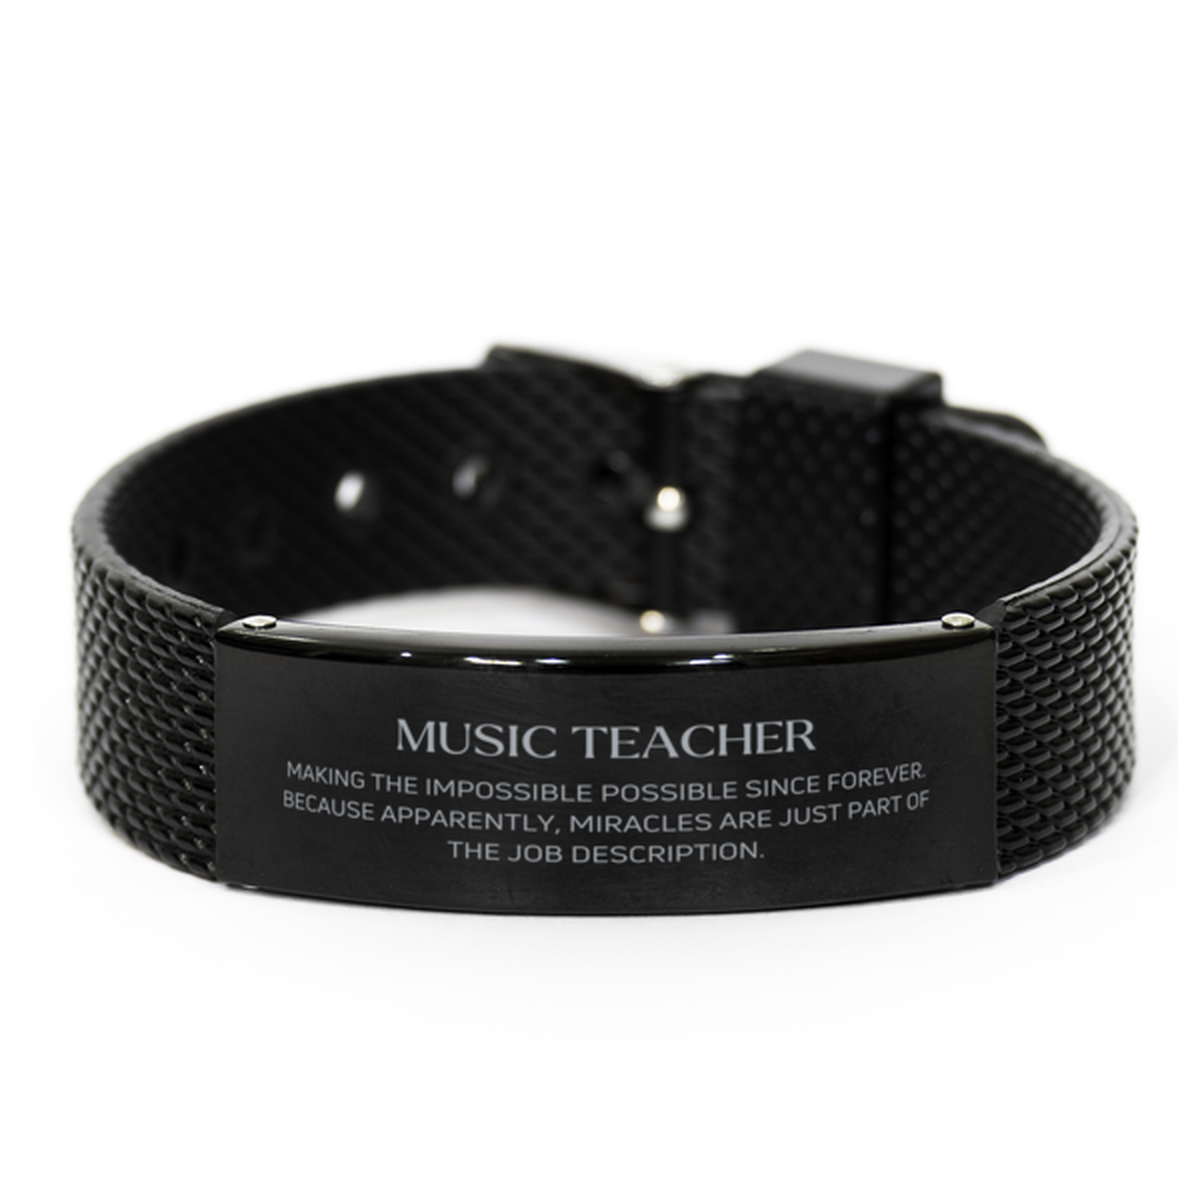 Funny Music Teacher Gifts, Miracles are just part of the job description, Inspirational Birthday Black Shark Mesh Bracelet For Music Teacher, Men, Women, Coworkers, Friends, Boss